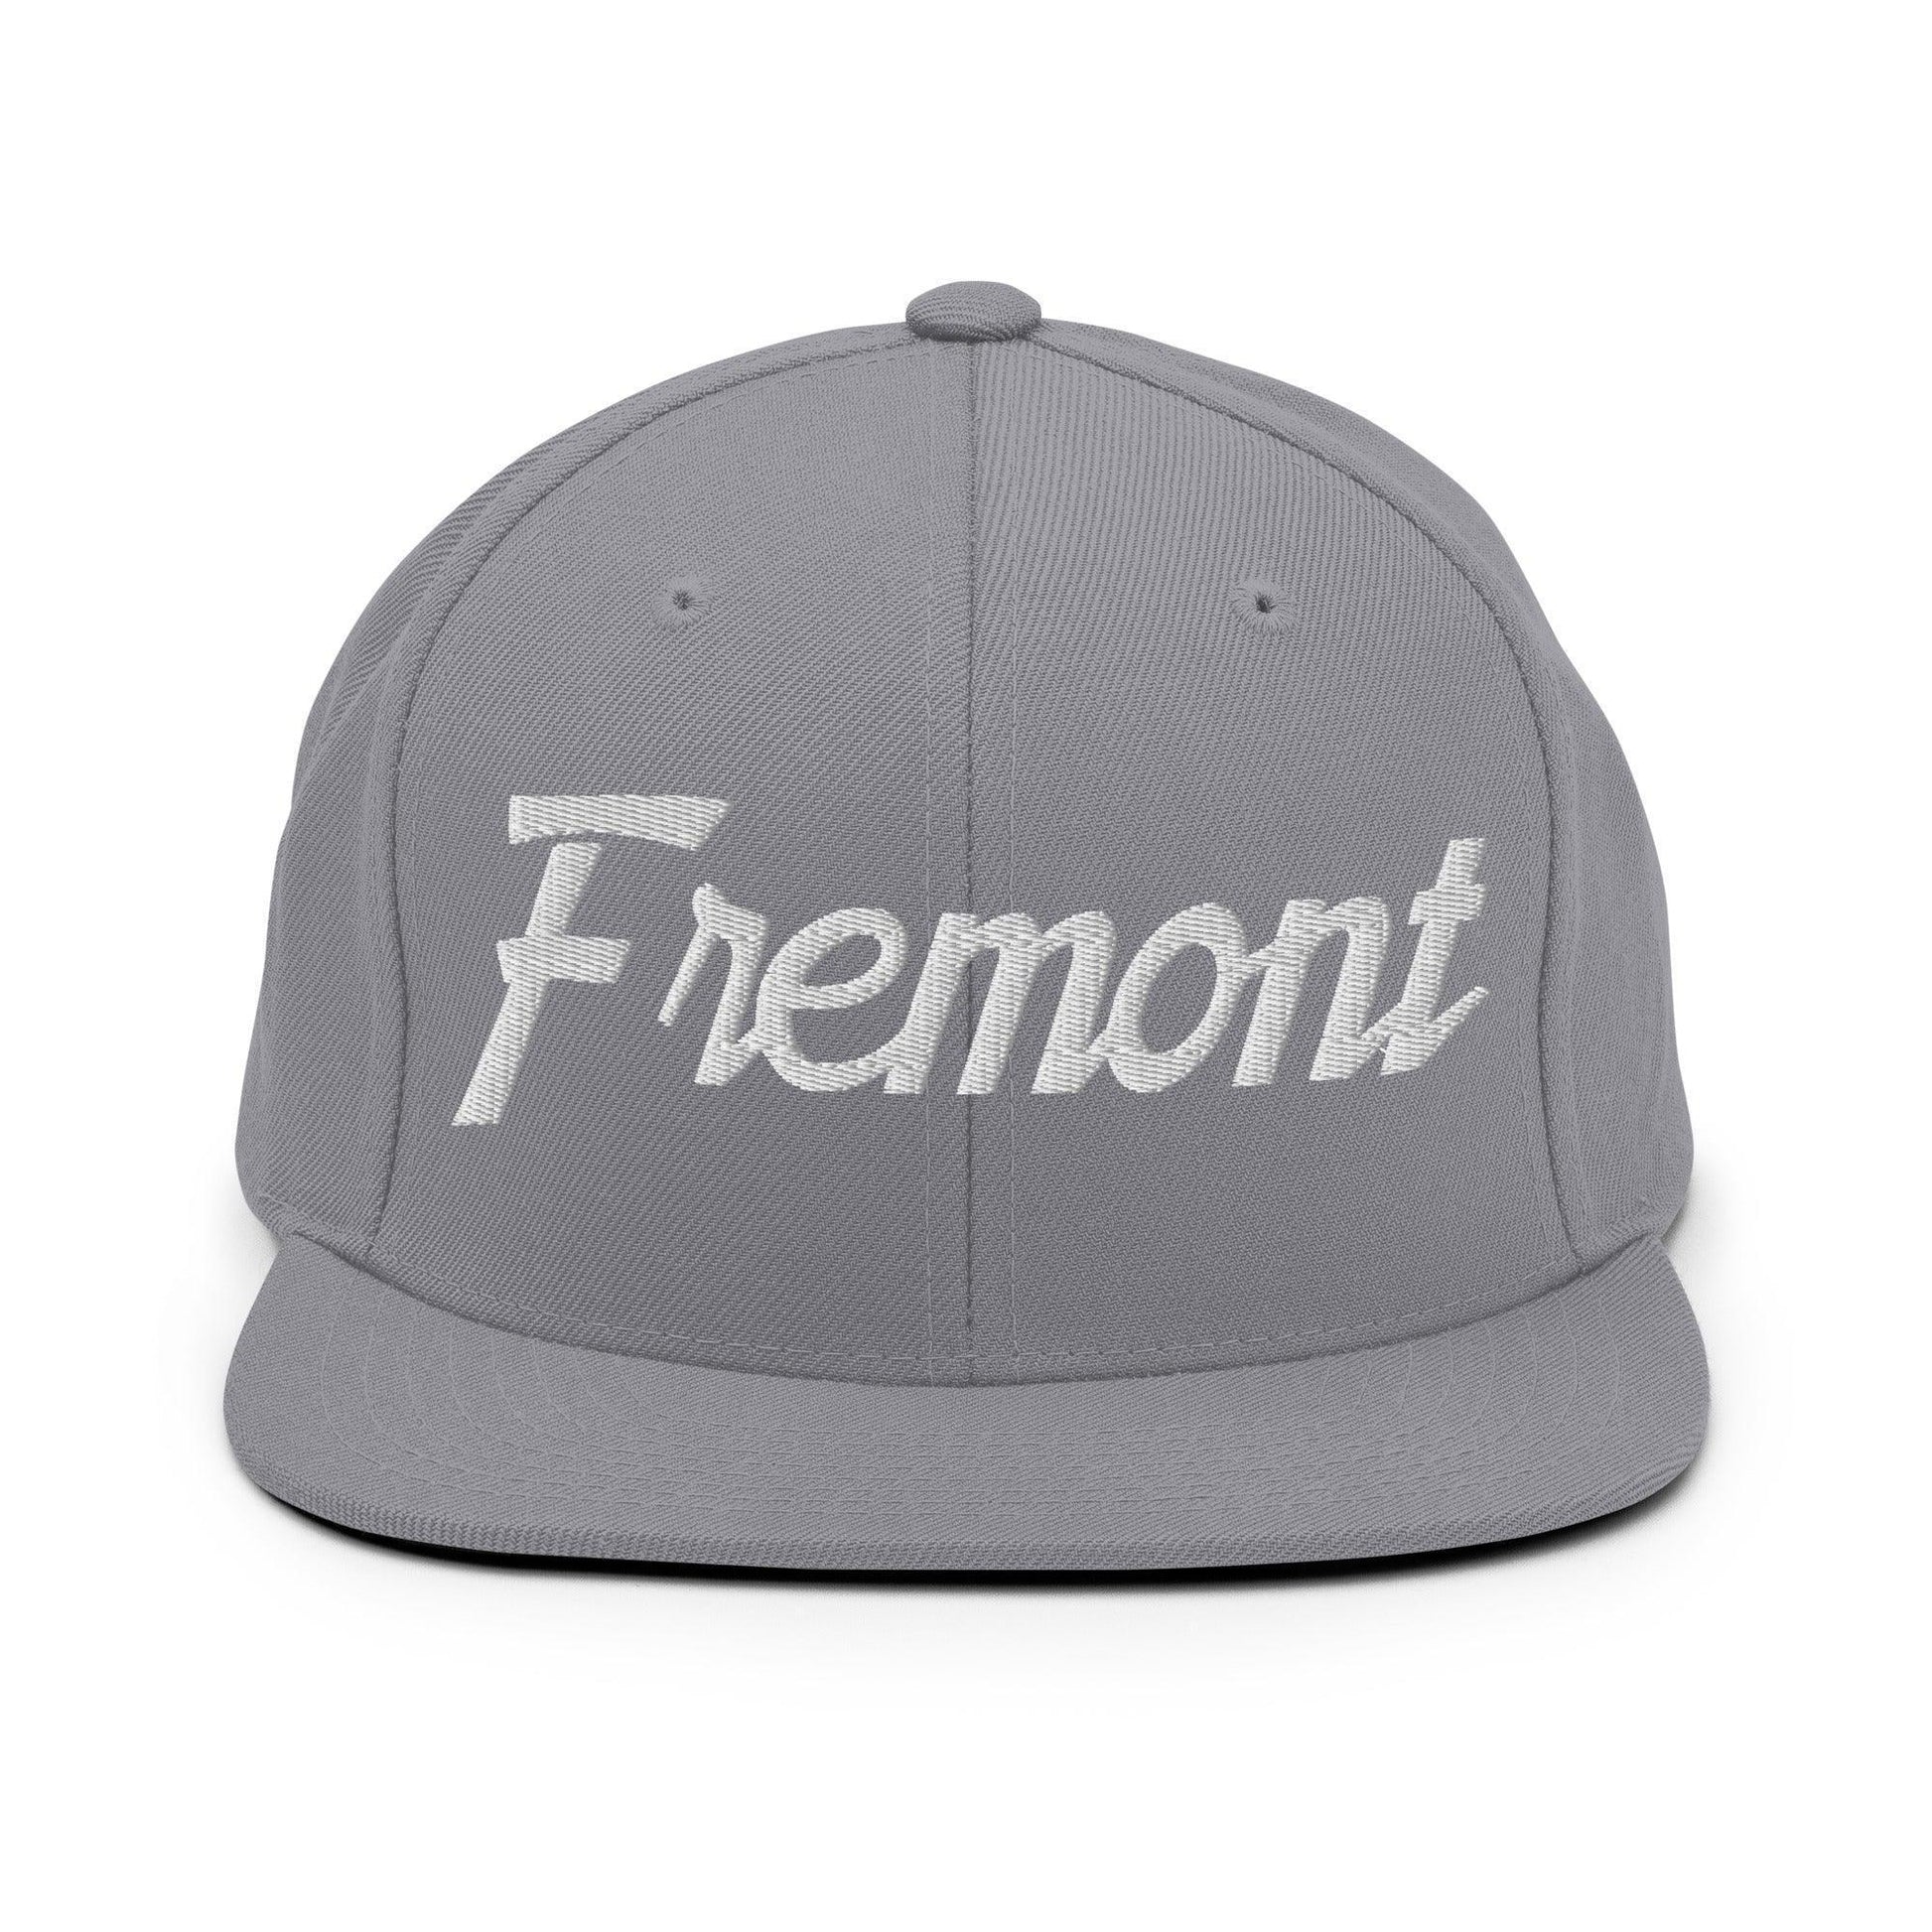 Fremont Script Snapback Hat Silver